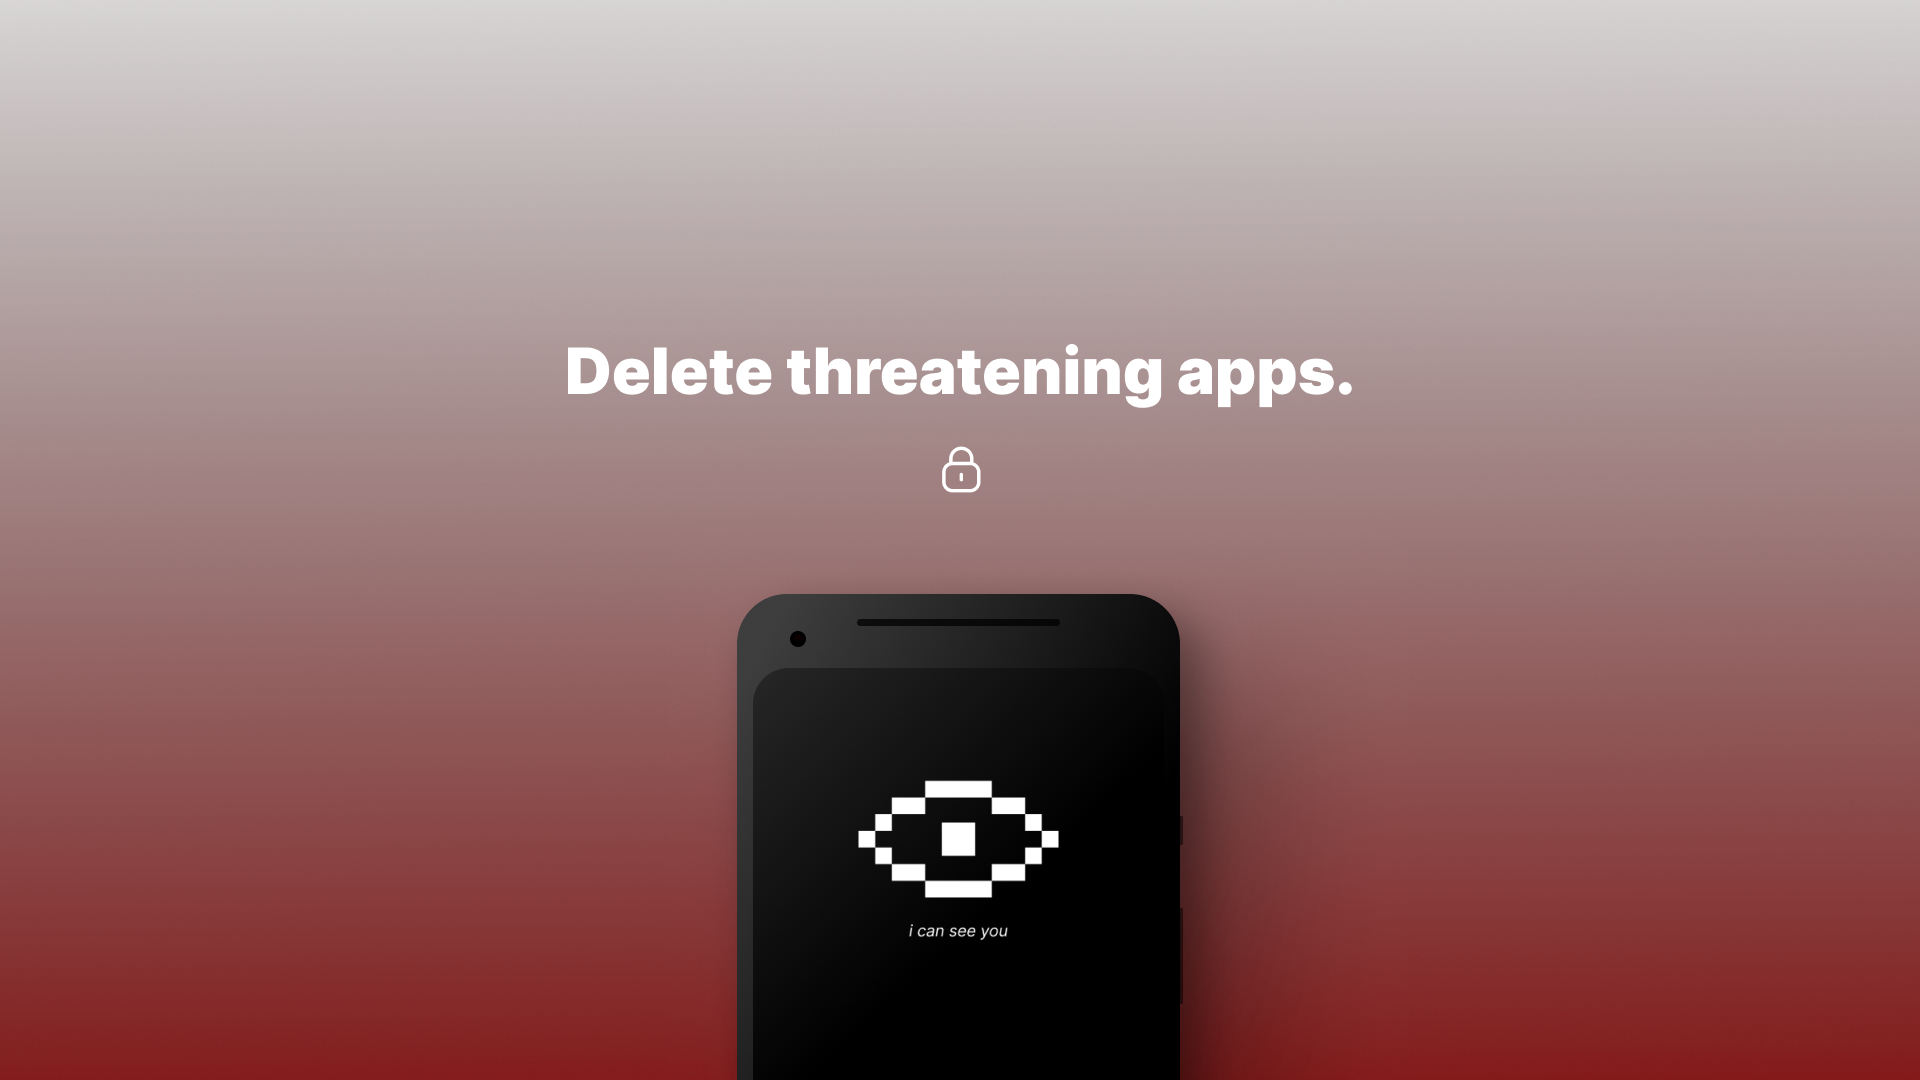 Delete threatening and spy apps